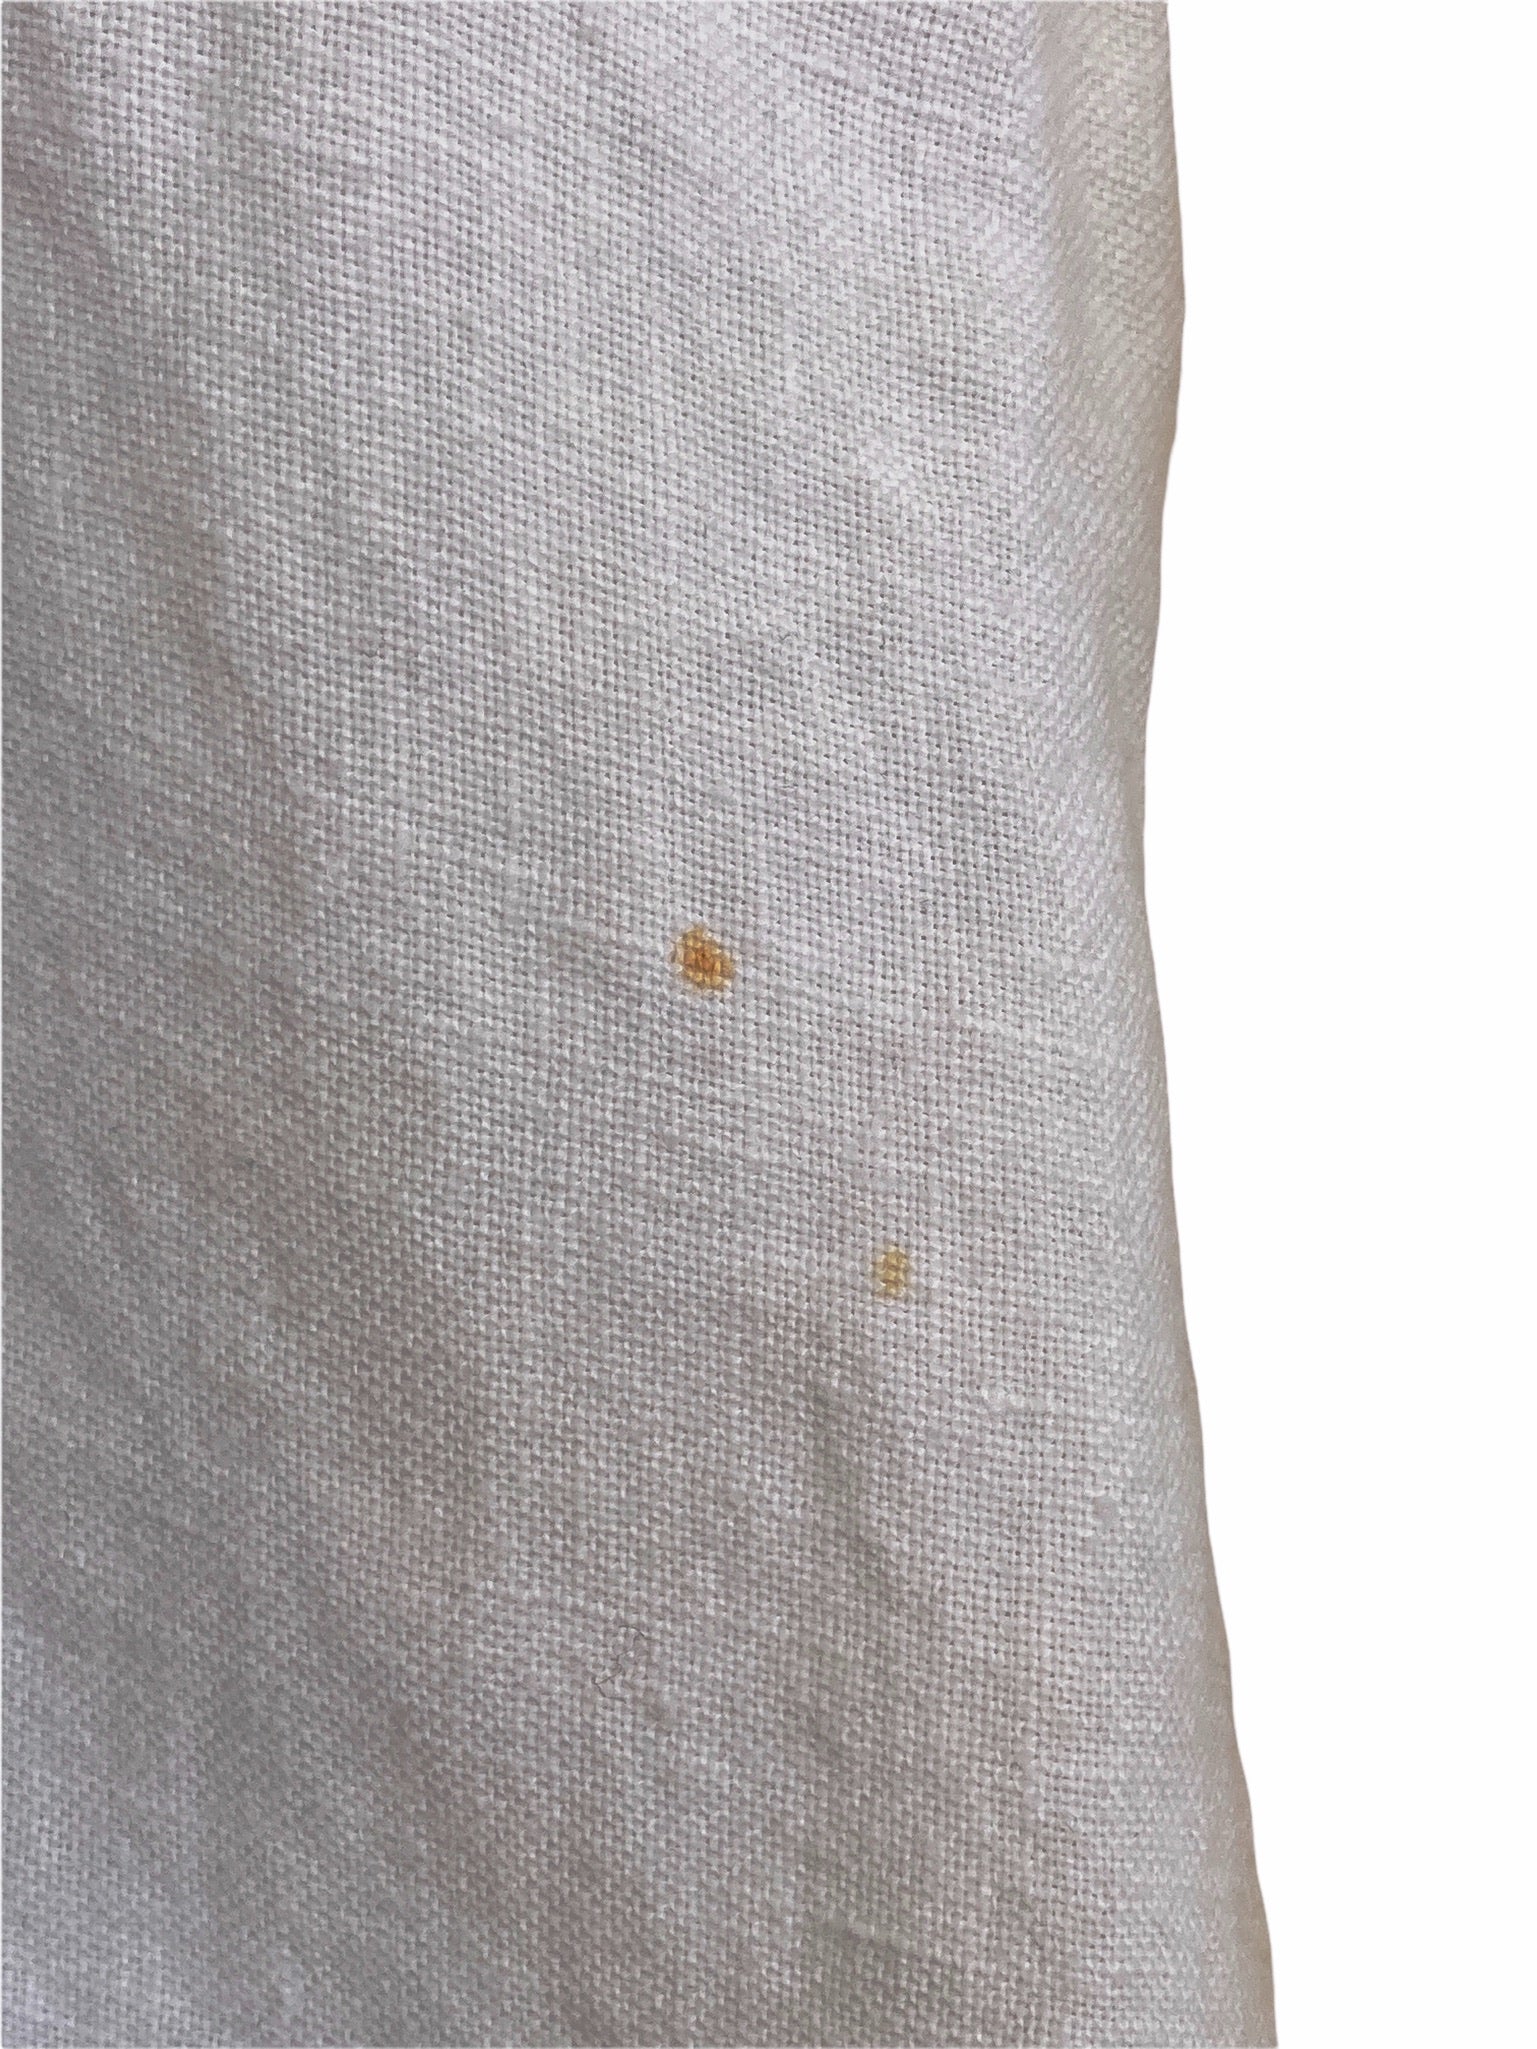 Lacoste White Linen Shirt, 10